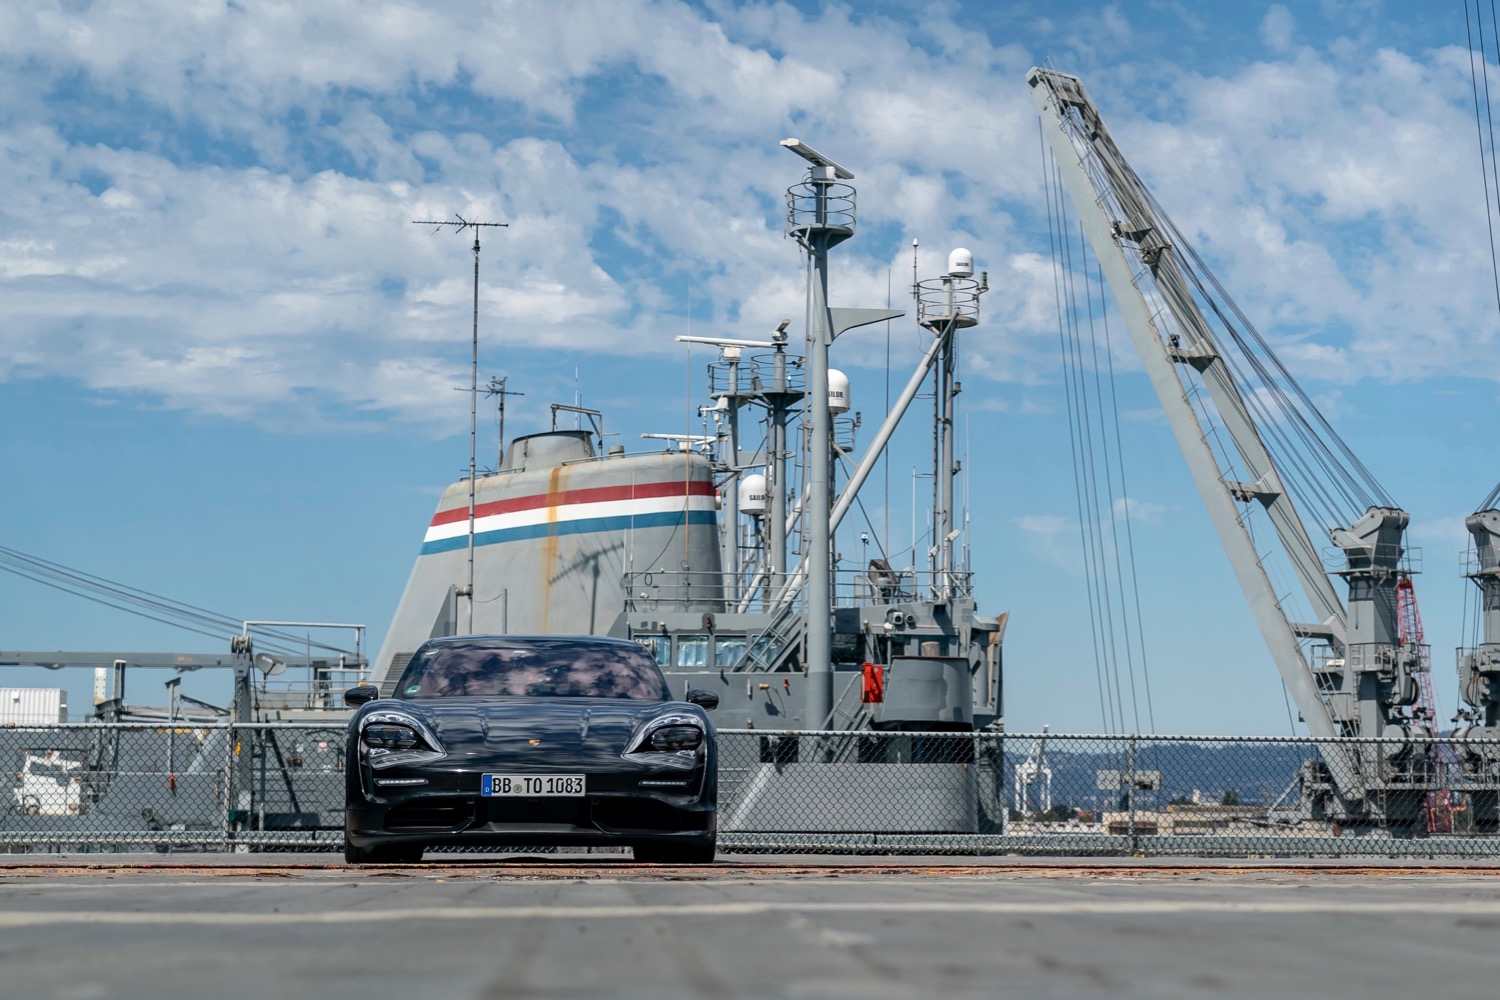 porsche taycan electric car acceleration test on aircraft carrier deck prototype